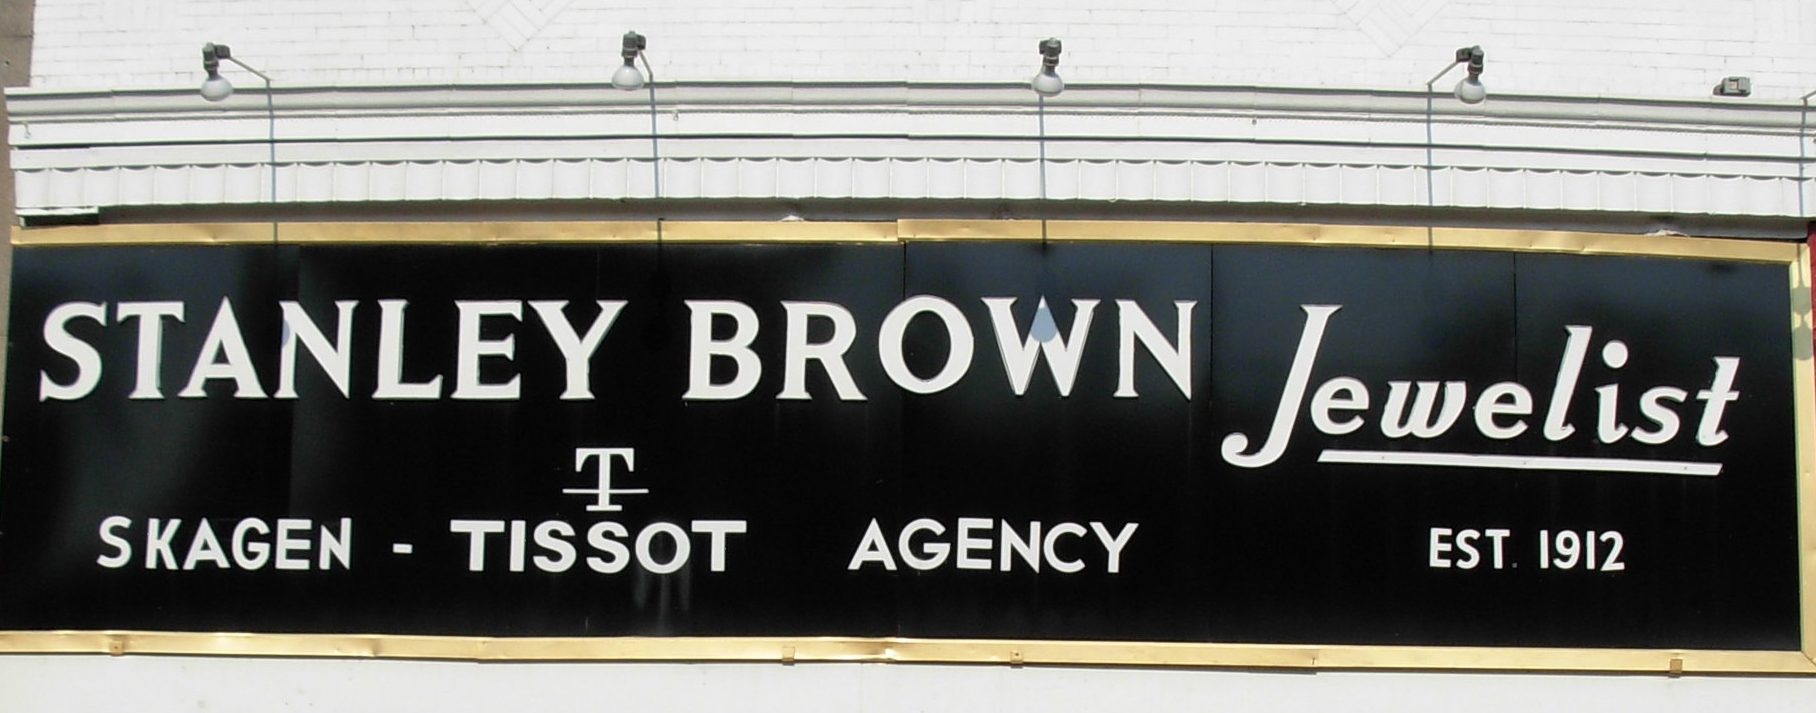 Stanley Brown Jewelist